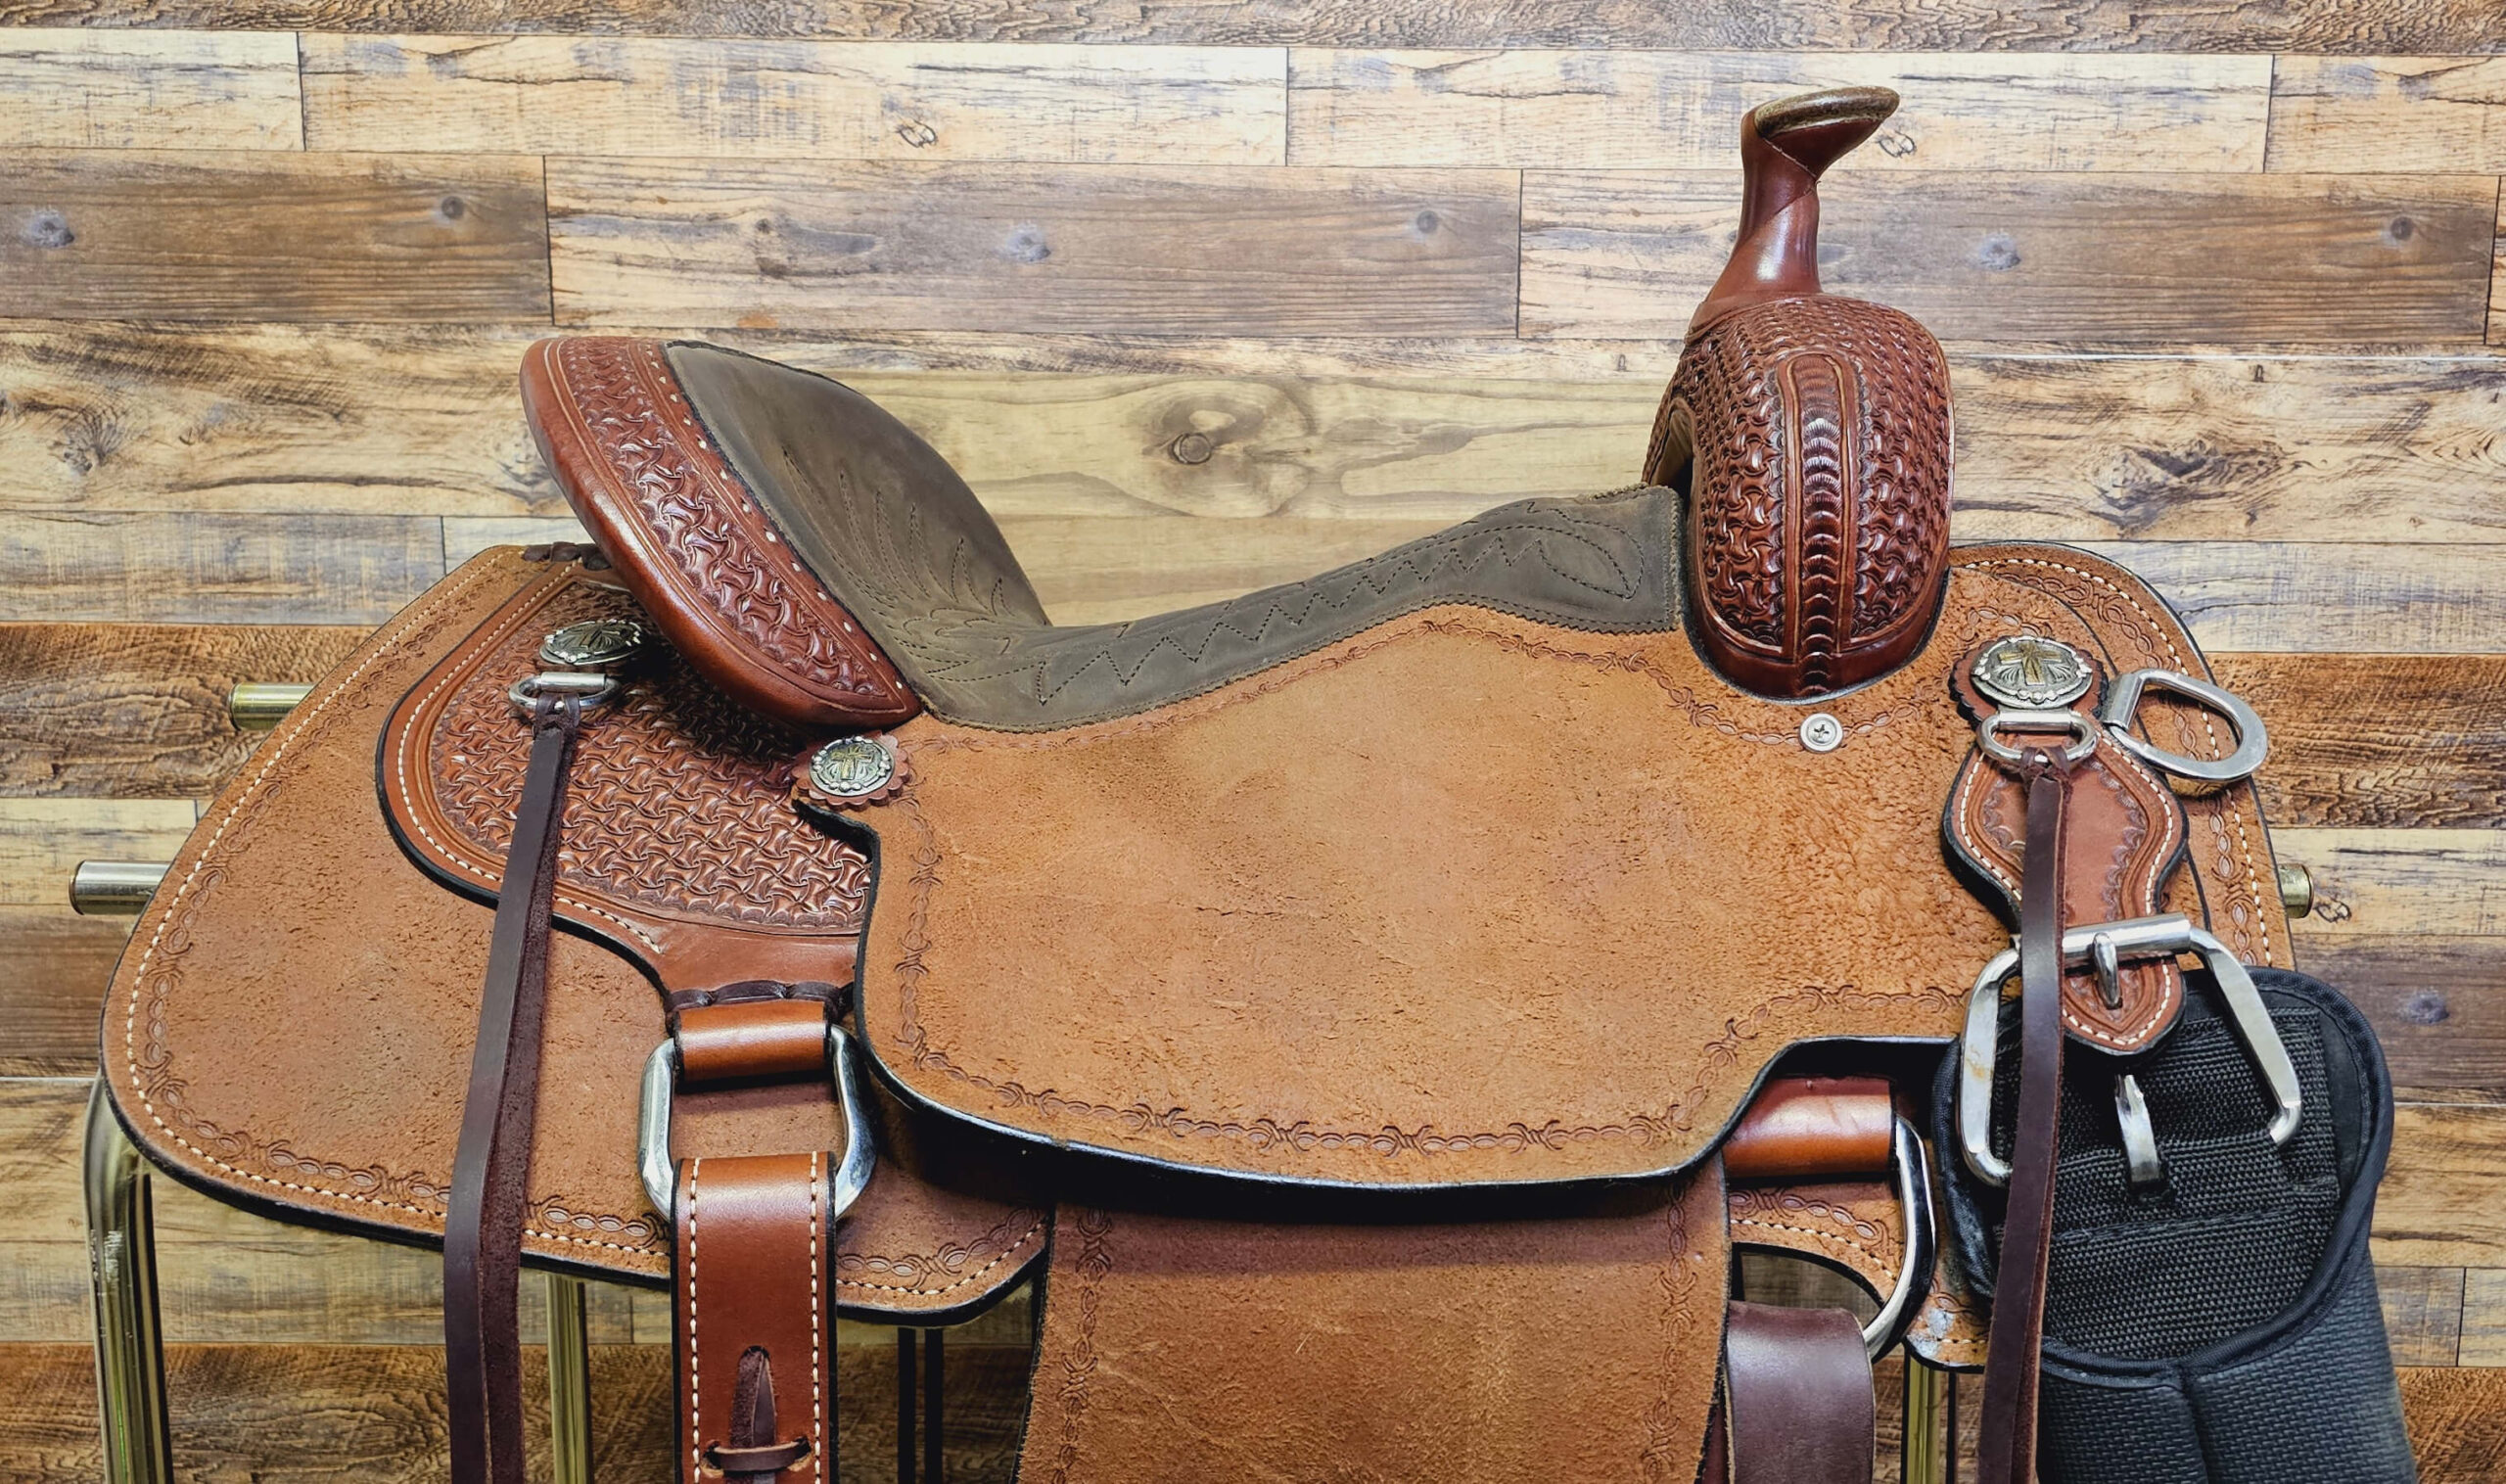 Used Reinsman Camarillo Saddle alternate detailed side view